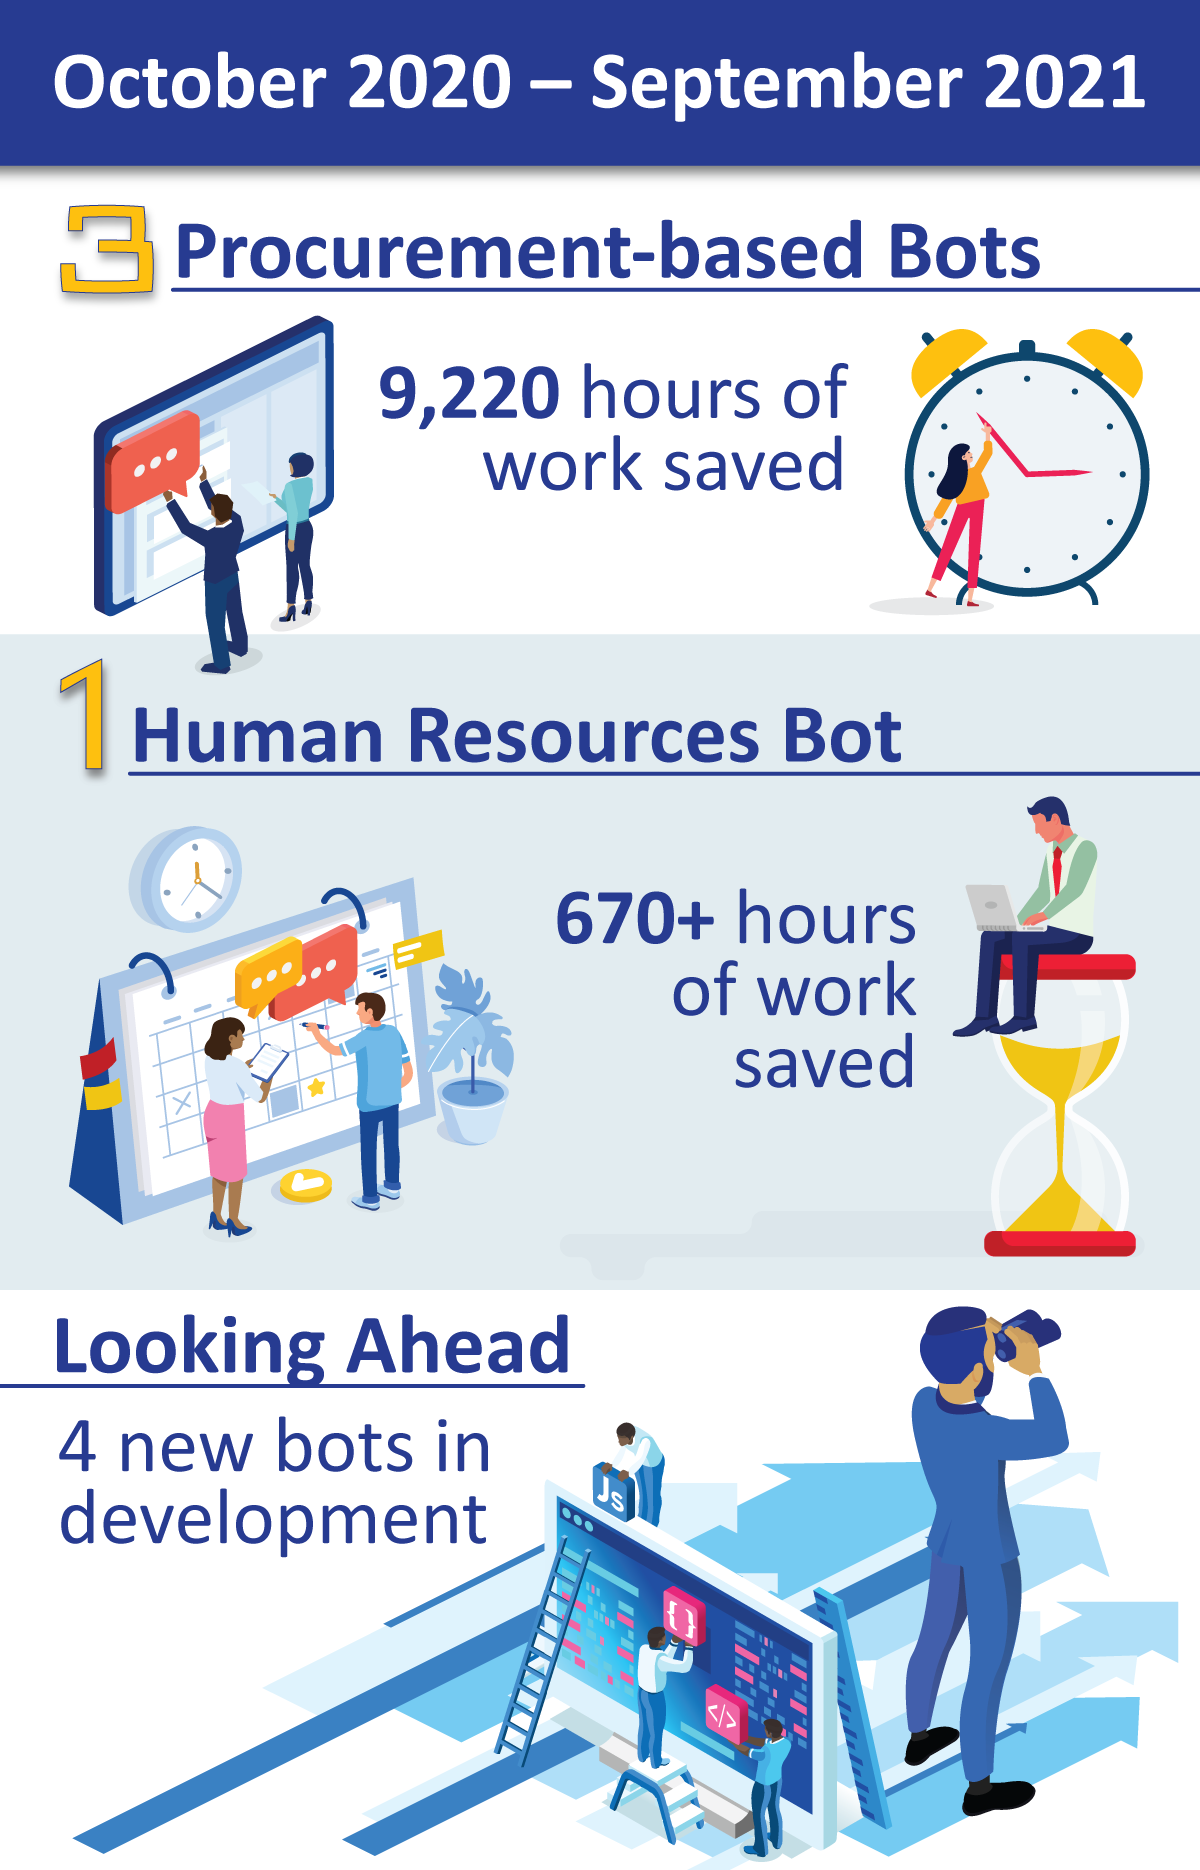 October 2020 to September 2021 data highlights: 3 procurement-based bots, 9220 hours of work saved. 1 Human resources bot. 670+ hours of work saved. Looking ahead: 4 new bots in development.